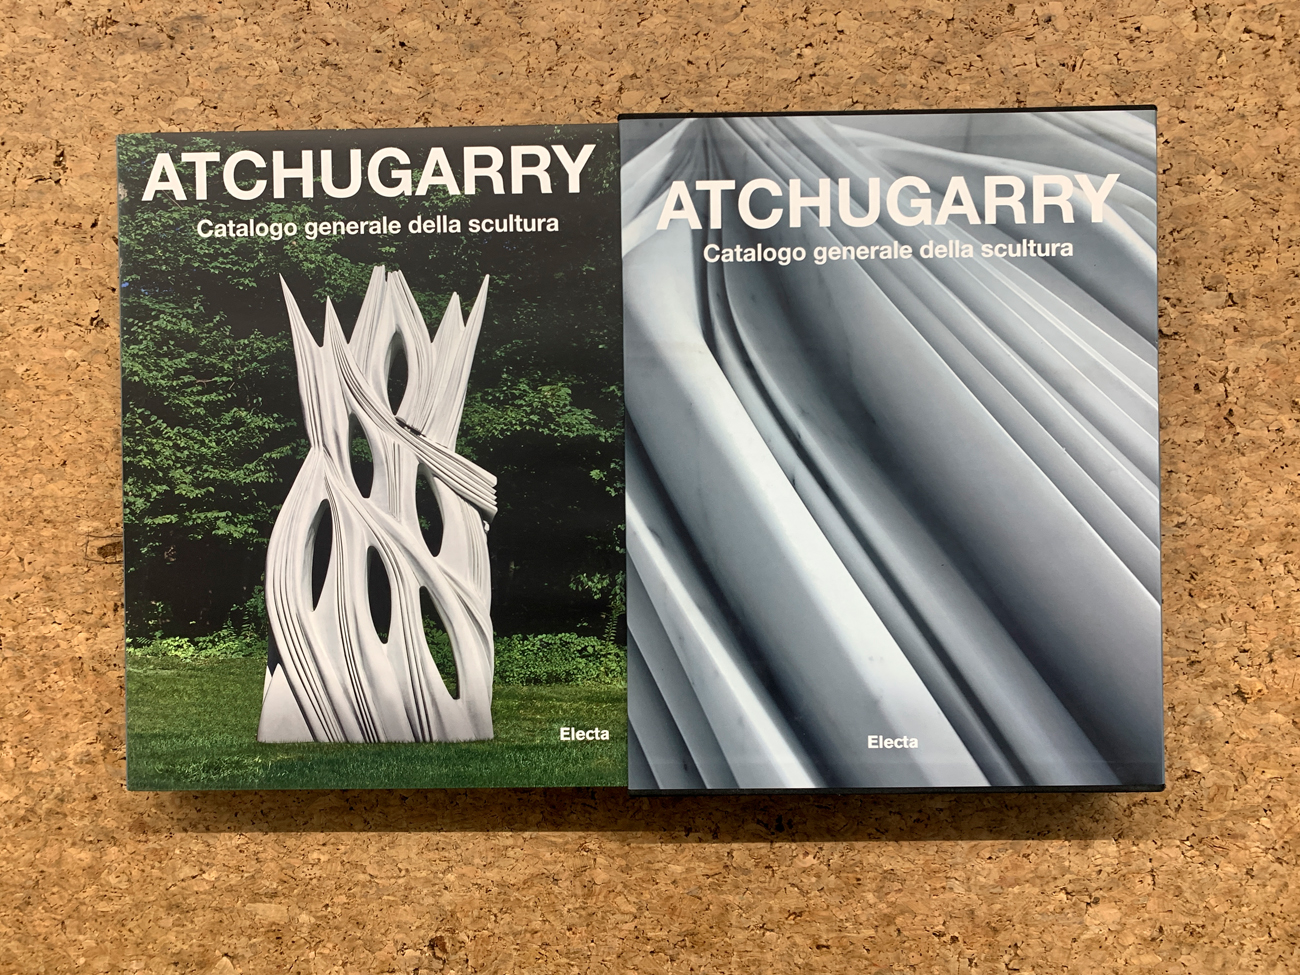 PABLO ATCHUGARRY - Atchugarry. Catalogo generale della scultura. Volume terzo 2013-2018, 2019